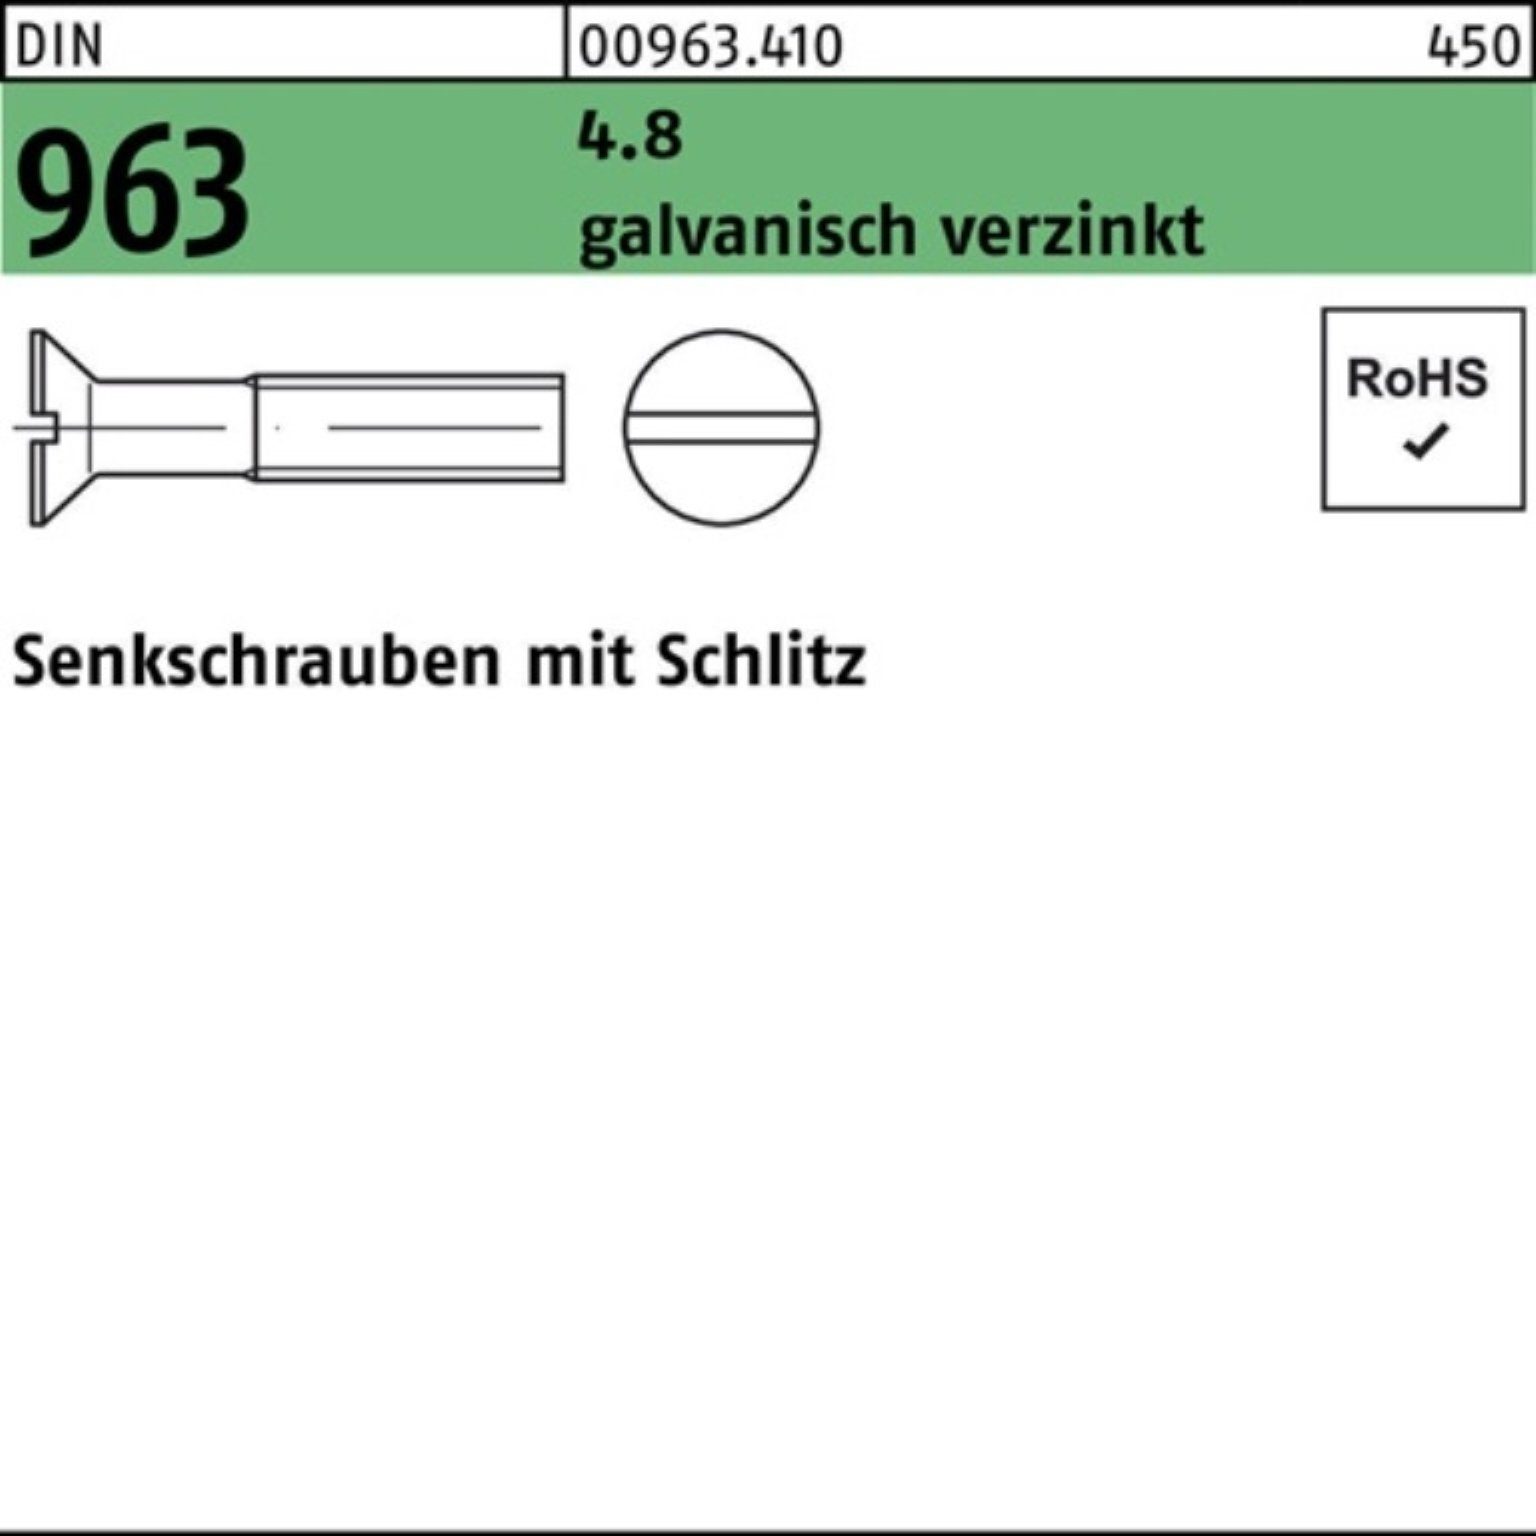 Reyher 200er 25 Senkschraube 4.8 Senkschraube Stü DIN Schlitz 963 galv.verz. 200 Pack M5x